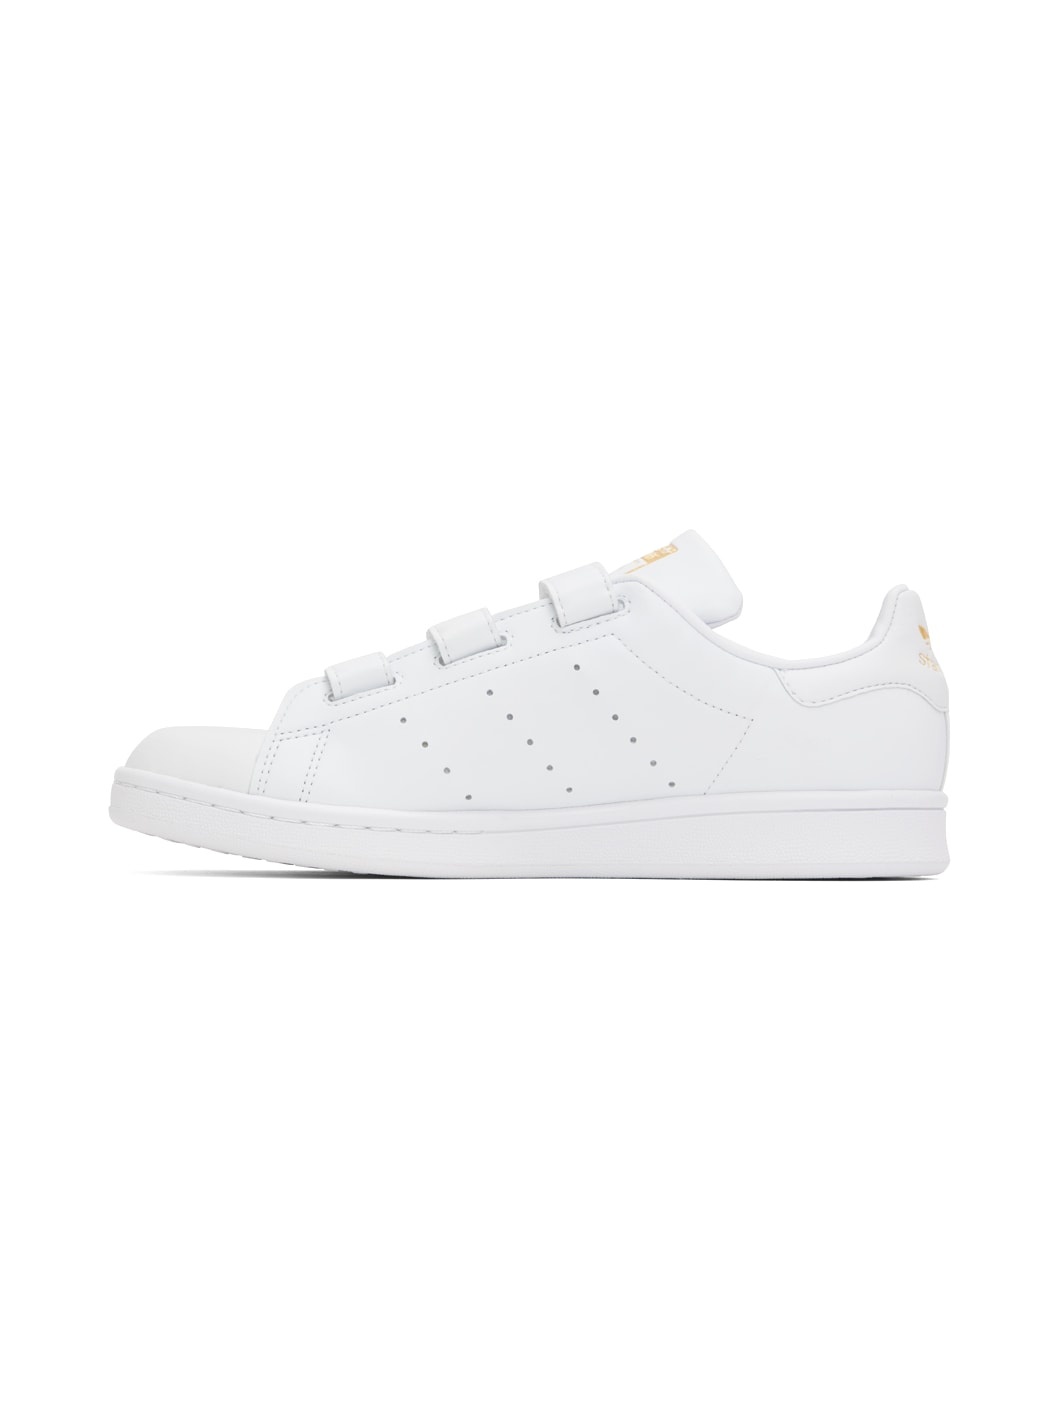 White & Gold Stan Smith Sneakers - 3